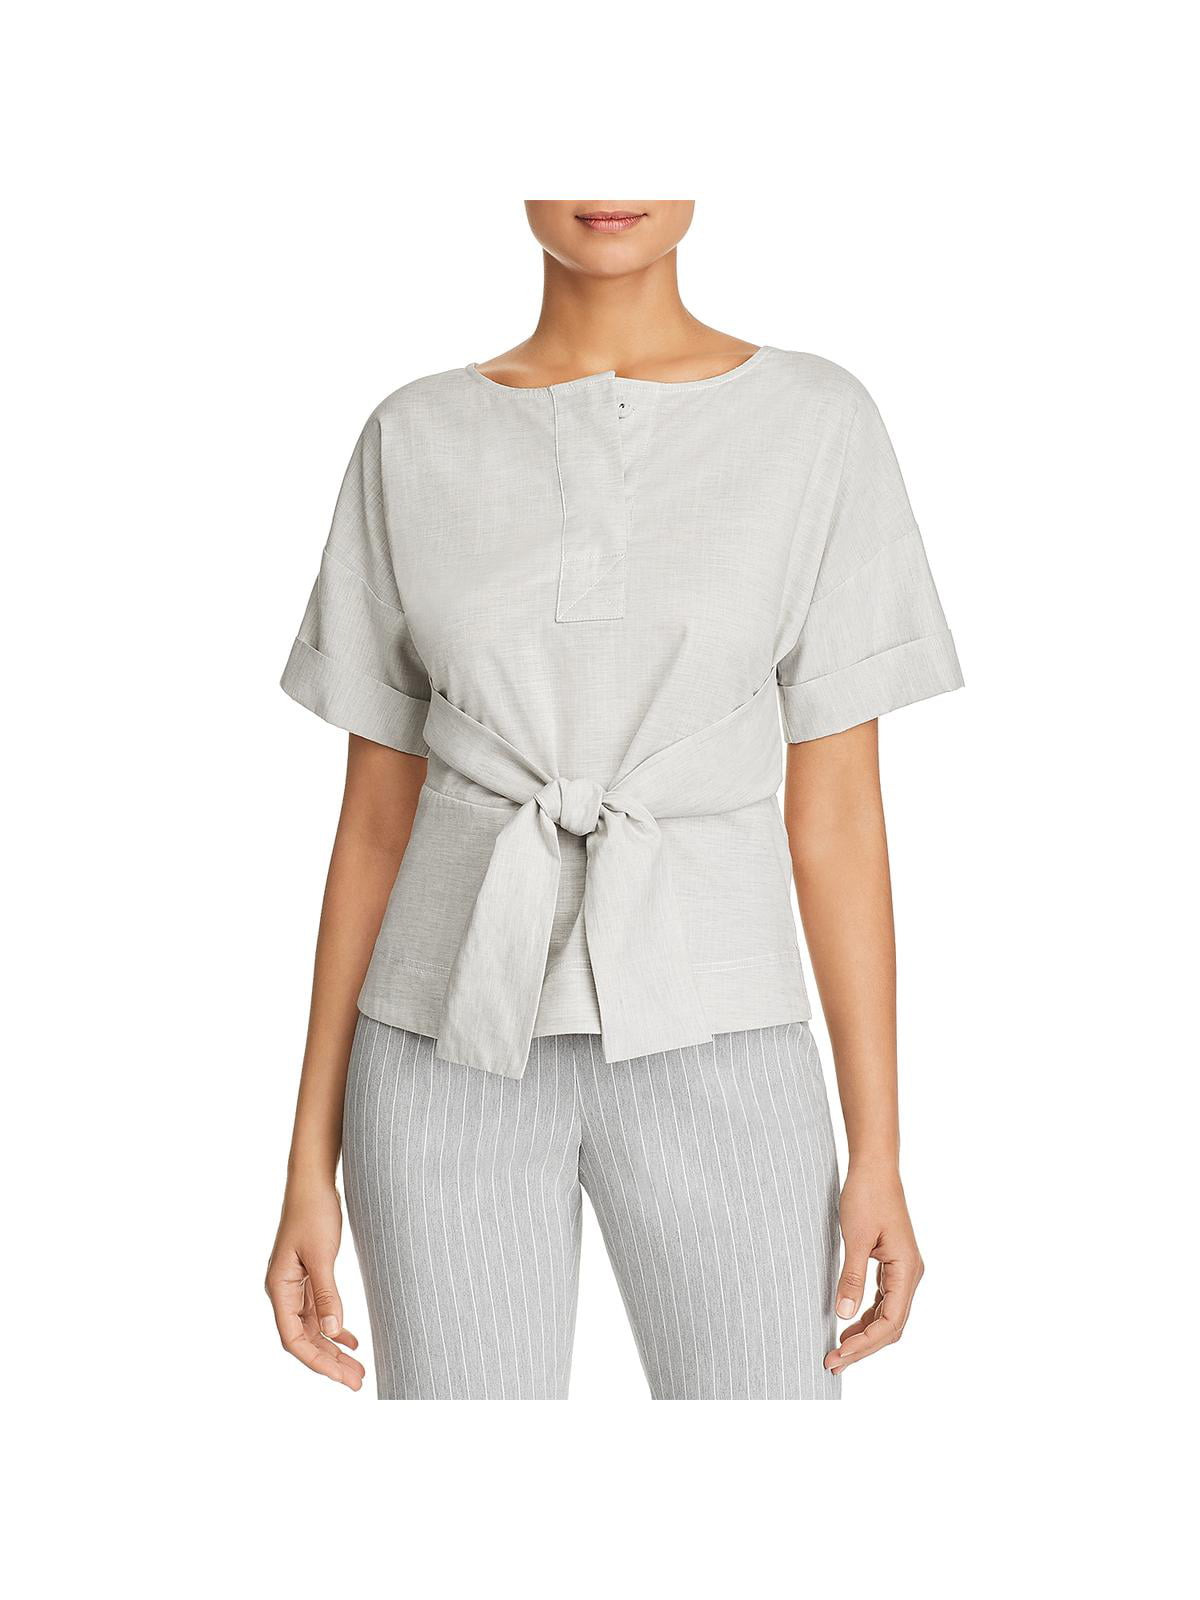 Donna Karan Womens Cotton Short Sleeves Pullover Top Gray M